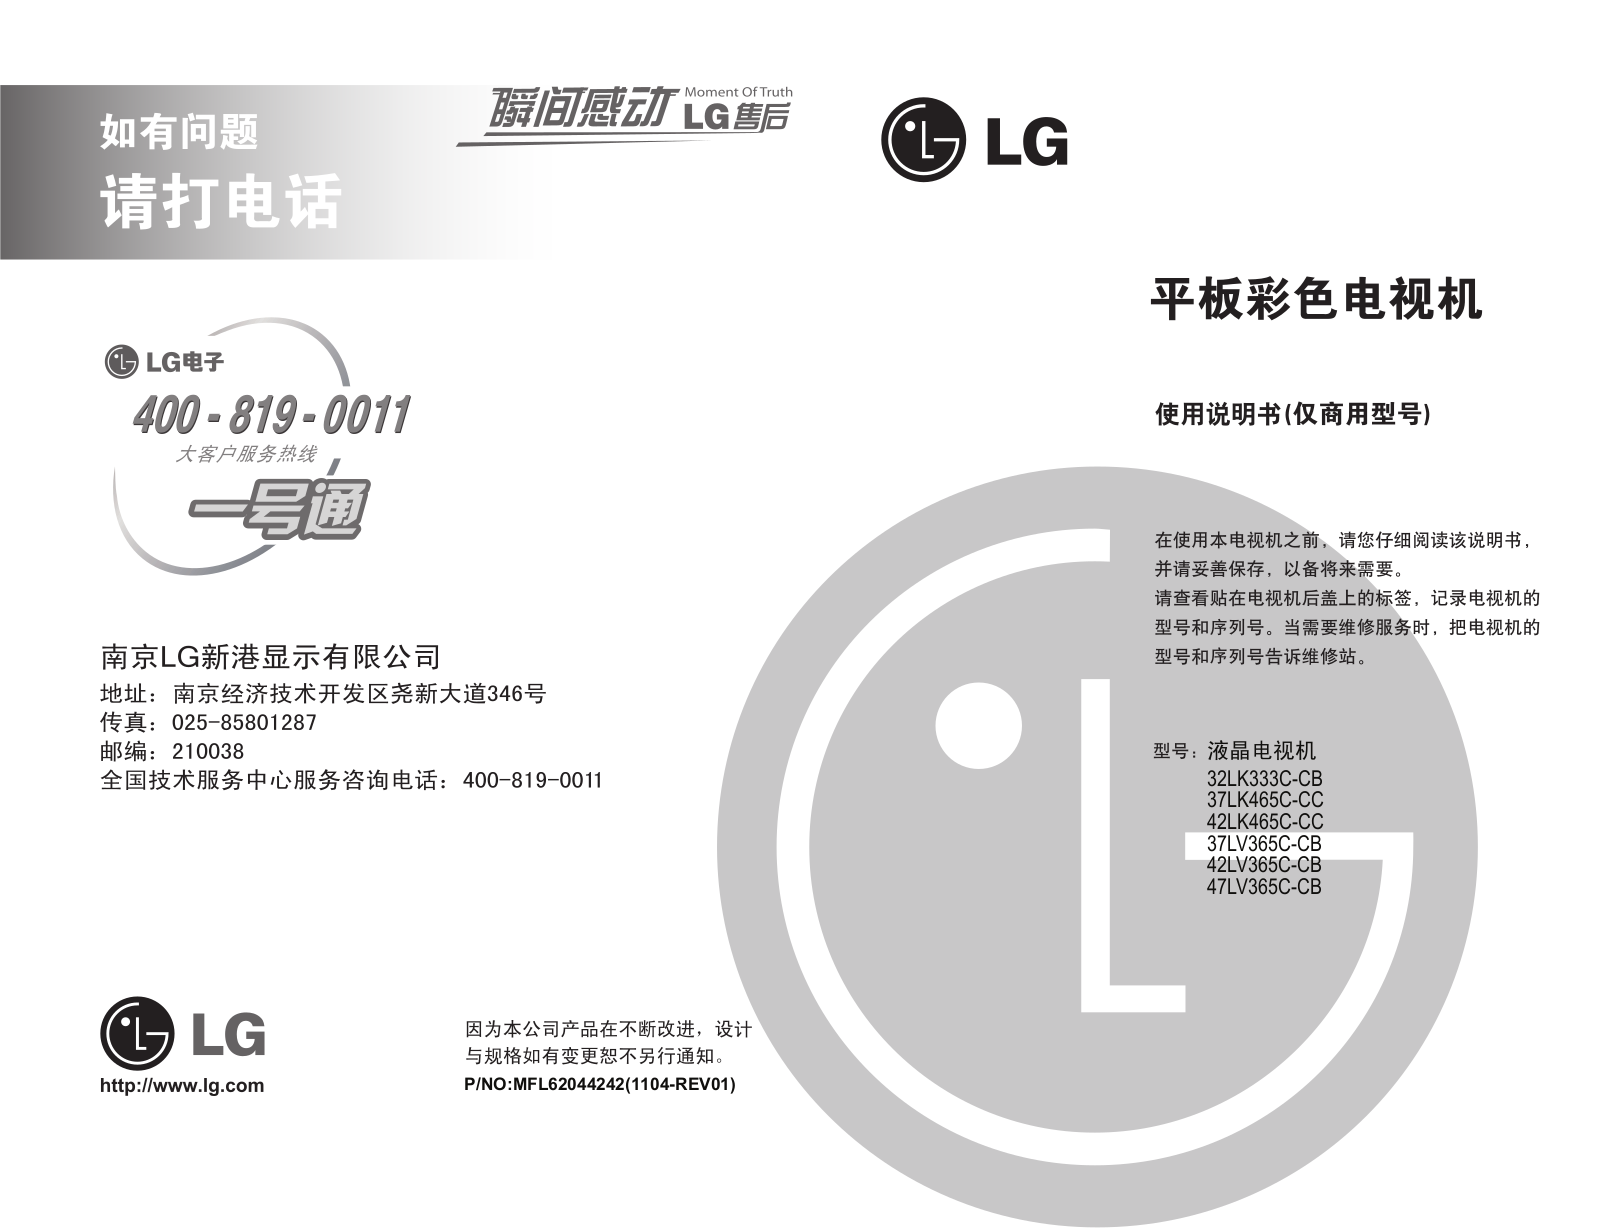 LG 42LK465C, 47LV365C Product Manual